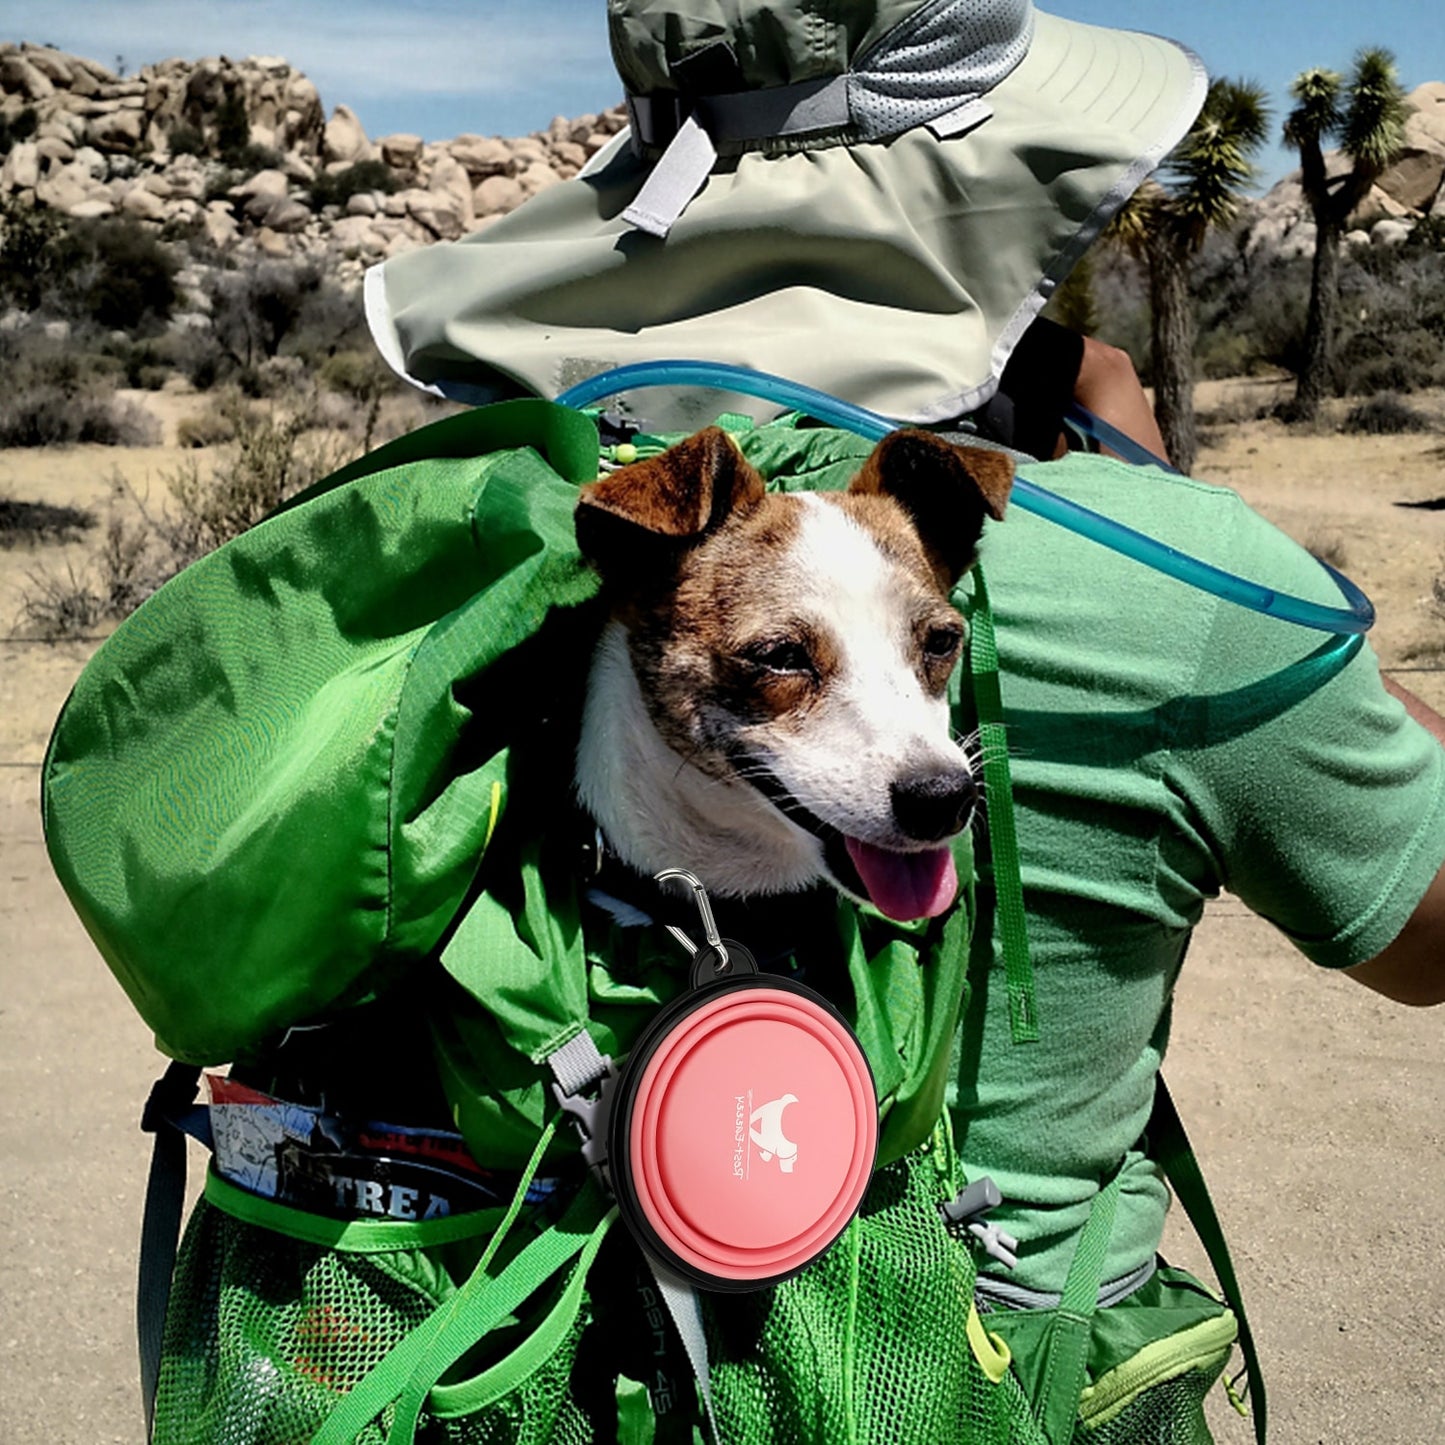 Colorful Pet Water and Food Bowl for Travel - Corgi Pet Deals